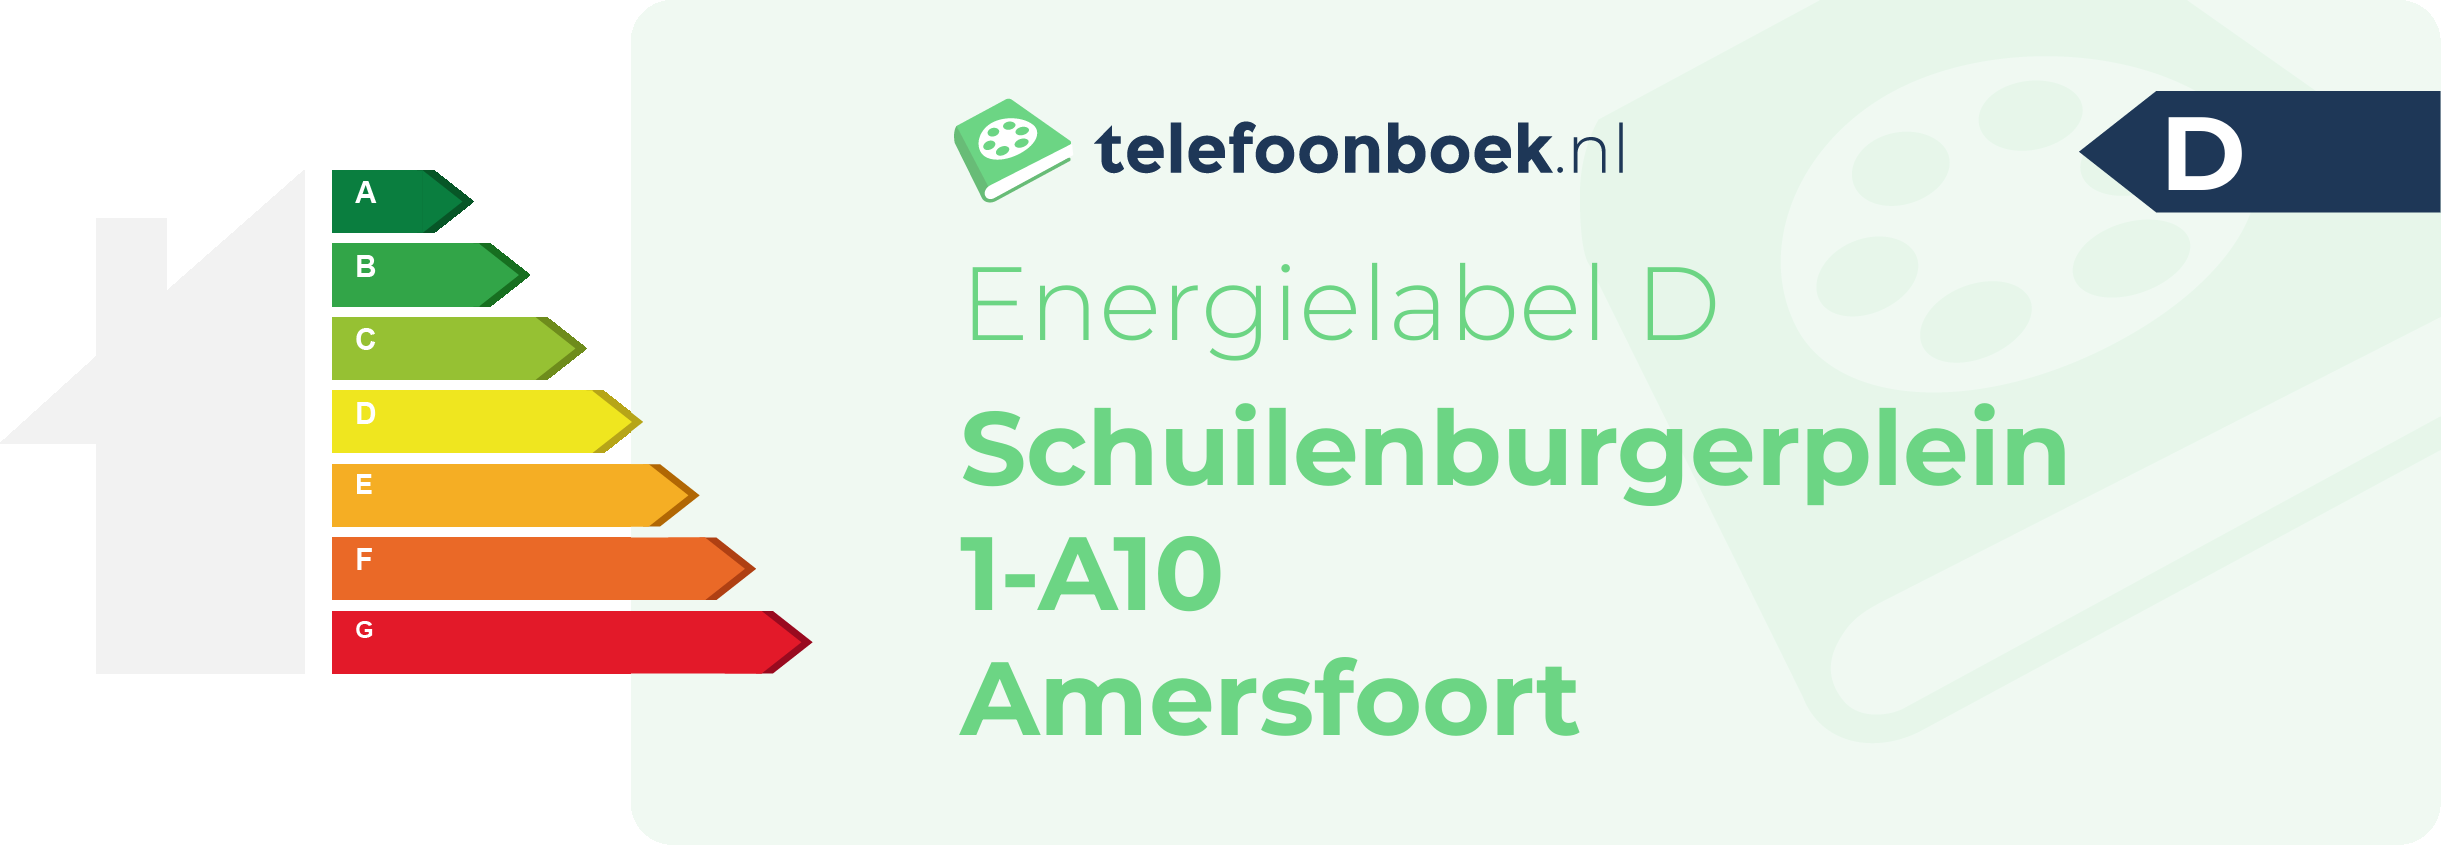 Energielabel Schuilenburgerplein 1-A10 Amersfoort